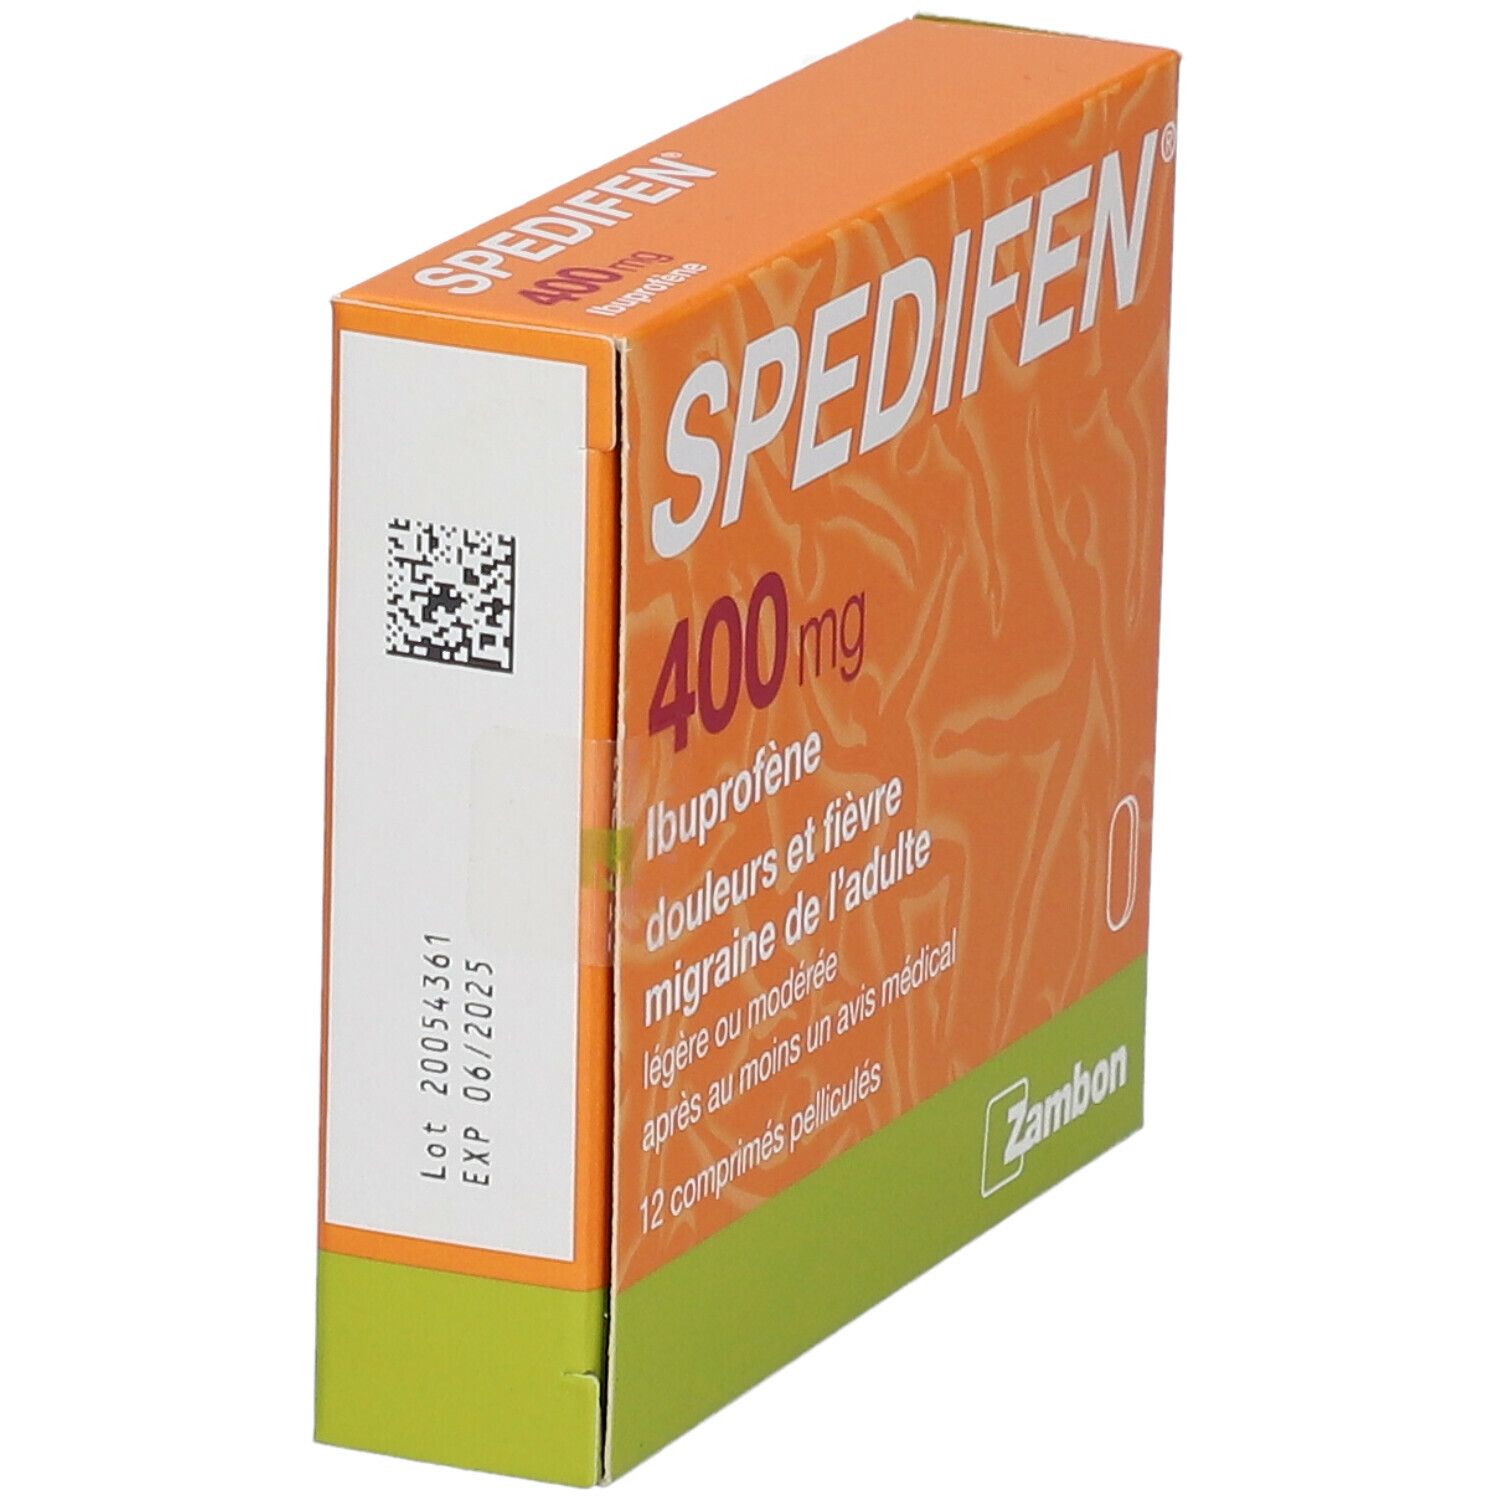 Spedifen® Ibuprofène 400 mg